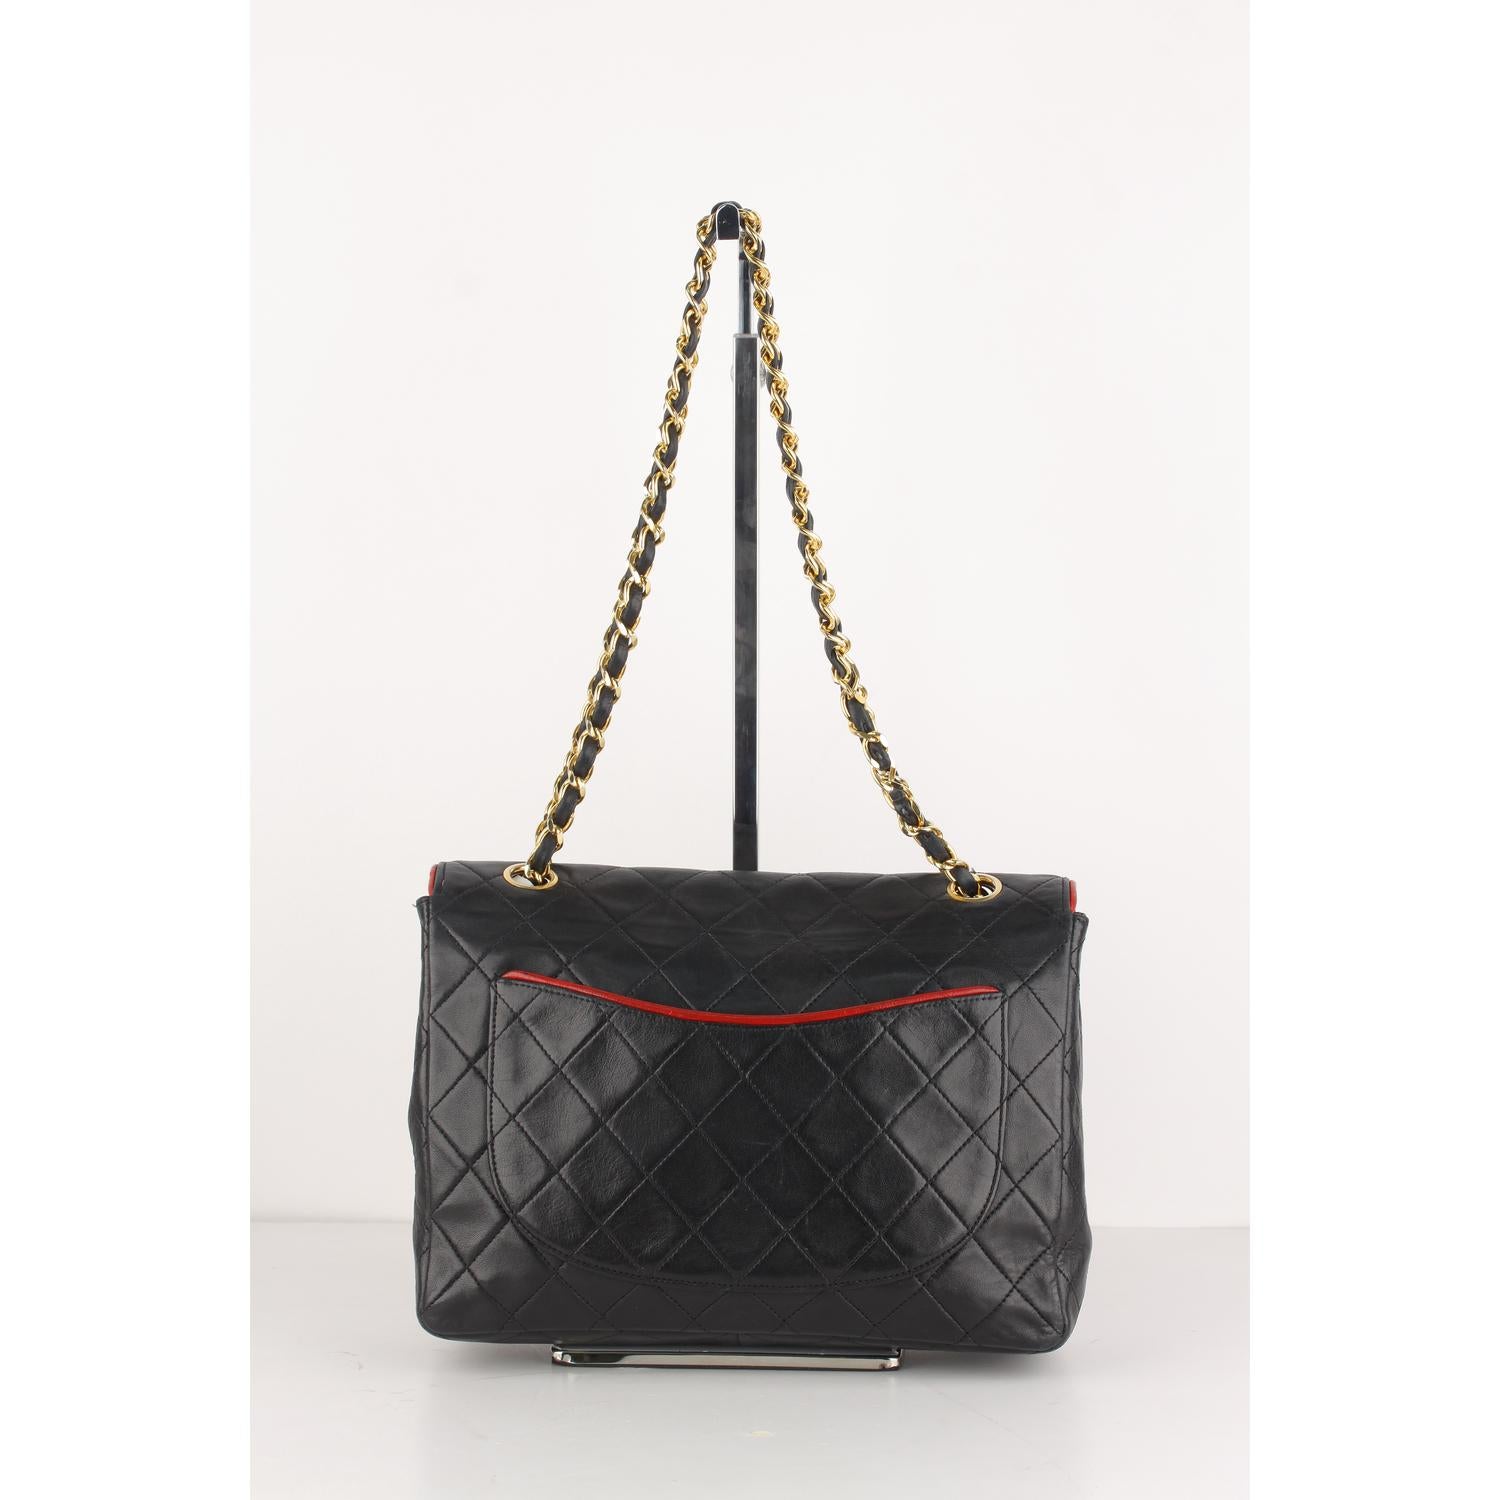 Women's Chanel Vintage Black Quilted Leather Shoulder Bag with Contrast Trim